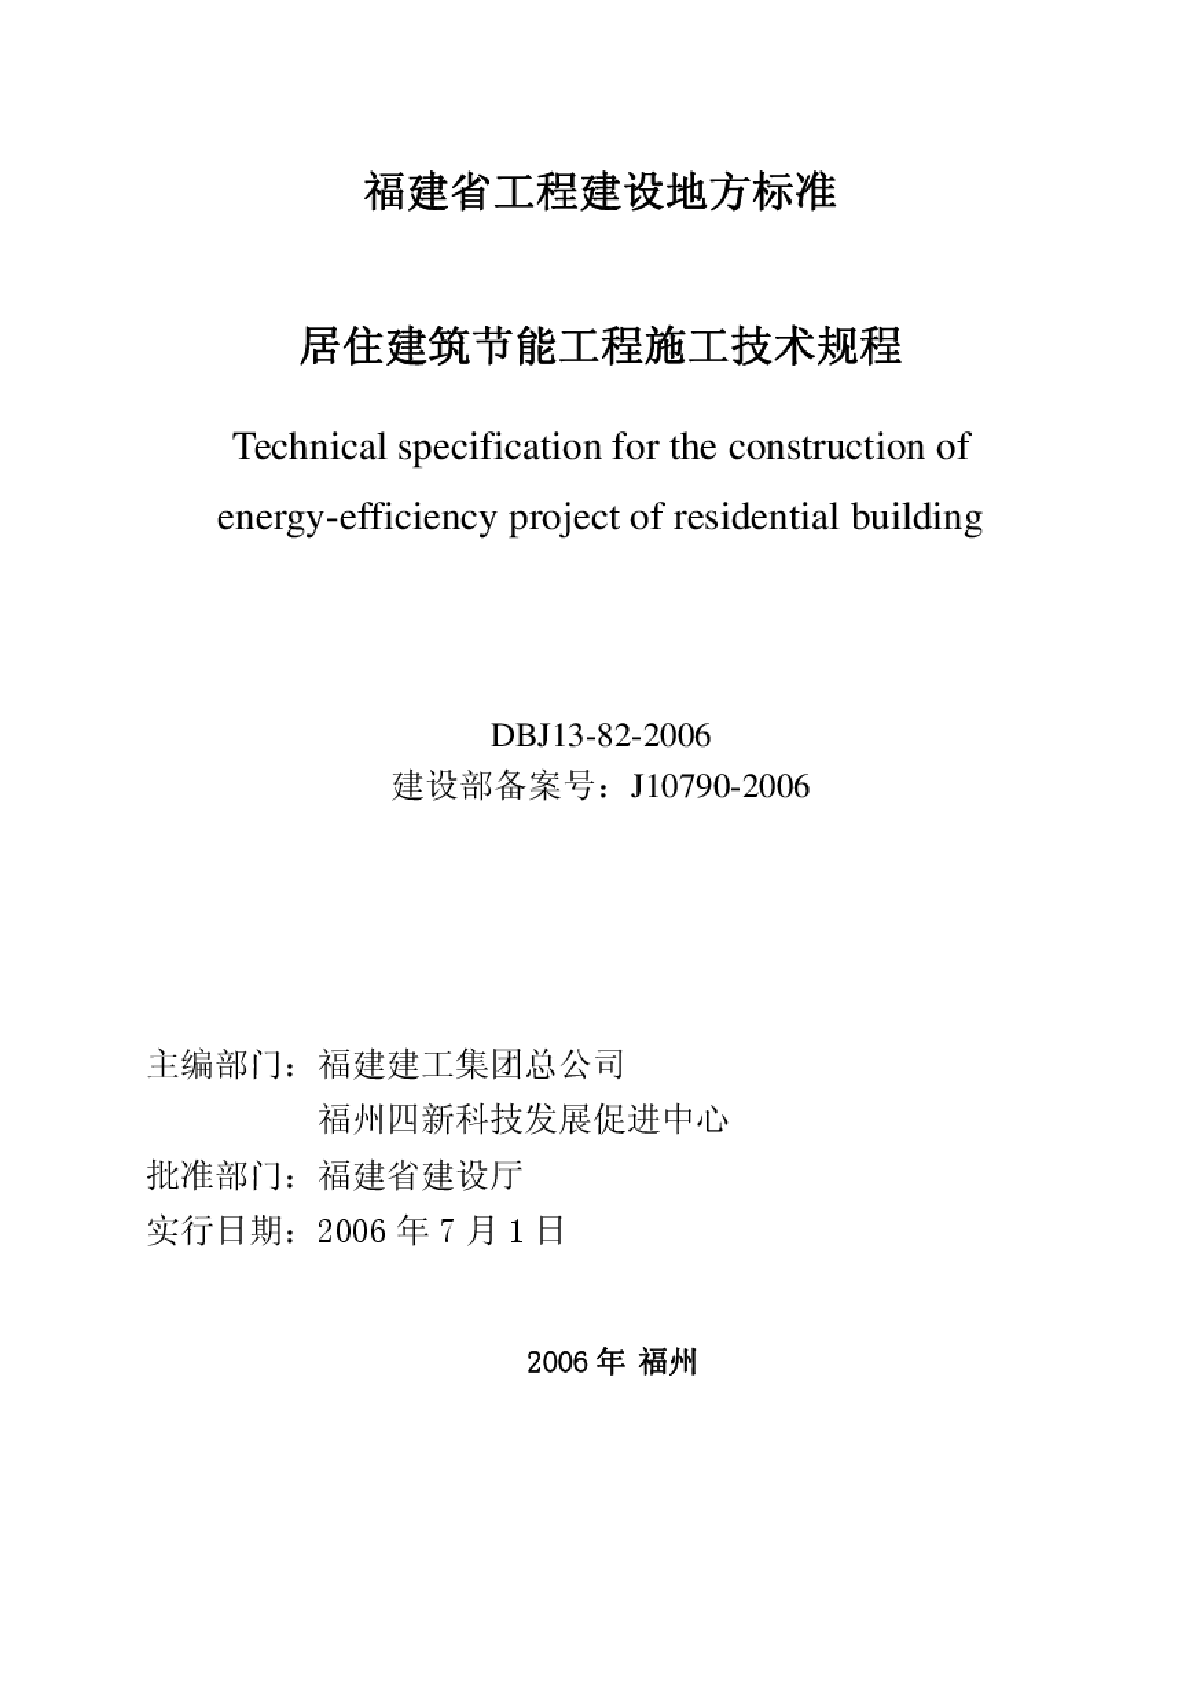 DBJ13-82-2006 福建省居住建筑节能工程施工技术规程-图二